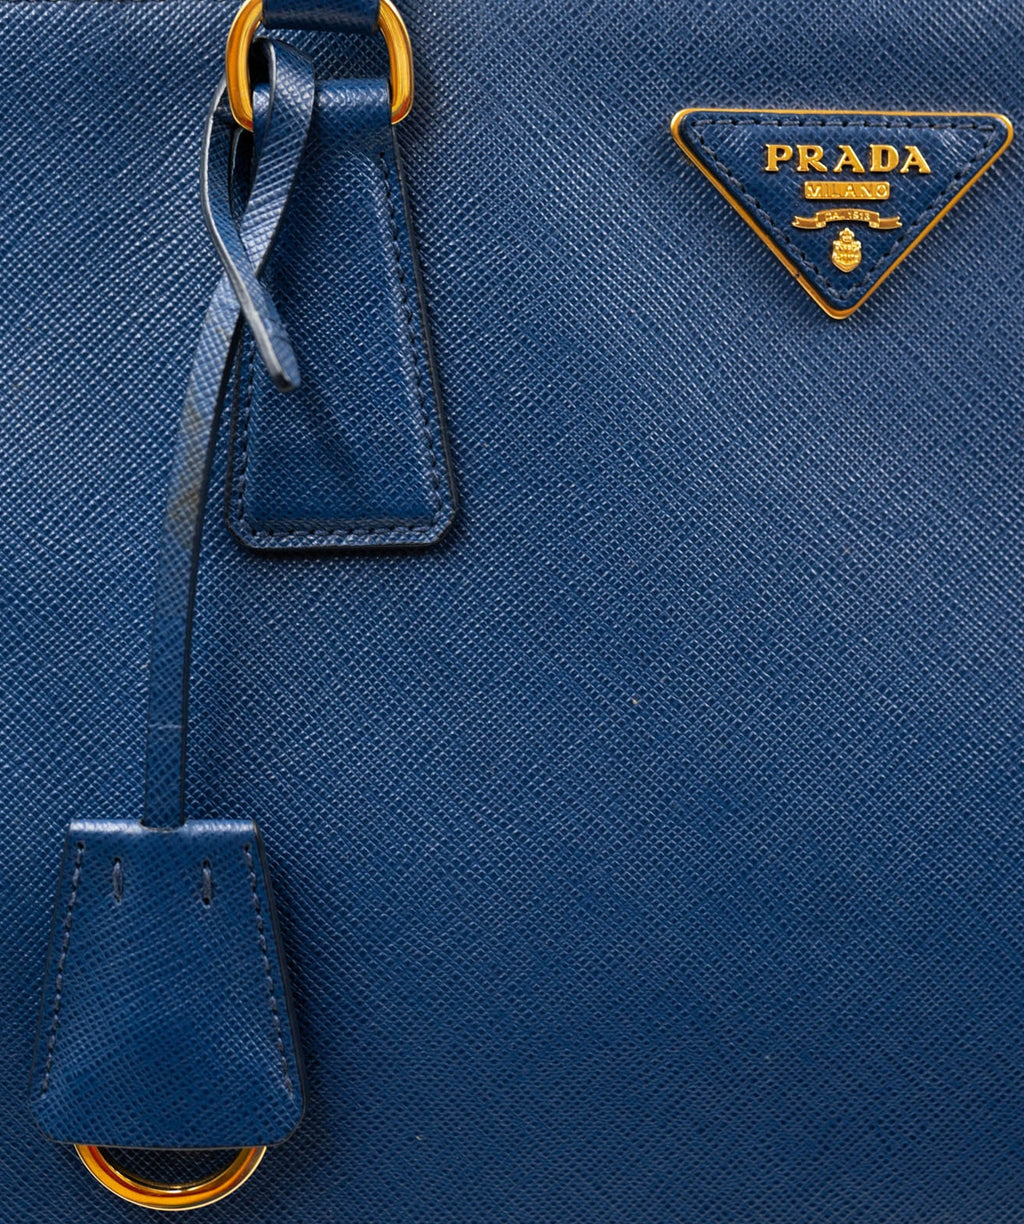 Bag - Prada Re-Nylon logo-plaque padded jacket - Denim - PRADA - Bag -  Pouch - Clutch - Blue – dct - Leather - ep_vintage luxury Store - Cosmetics